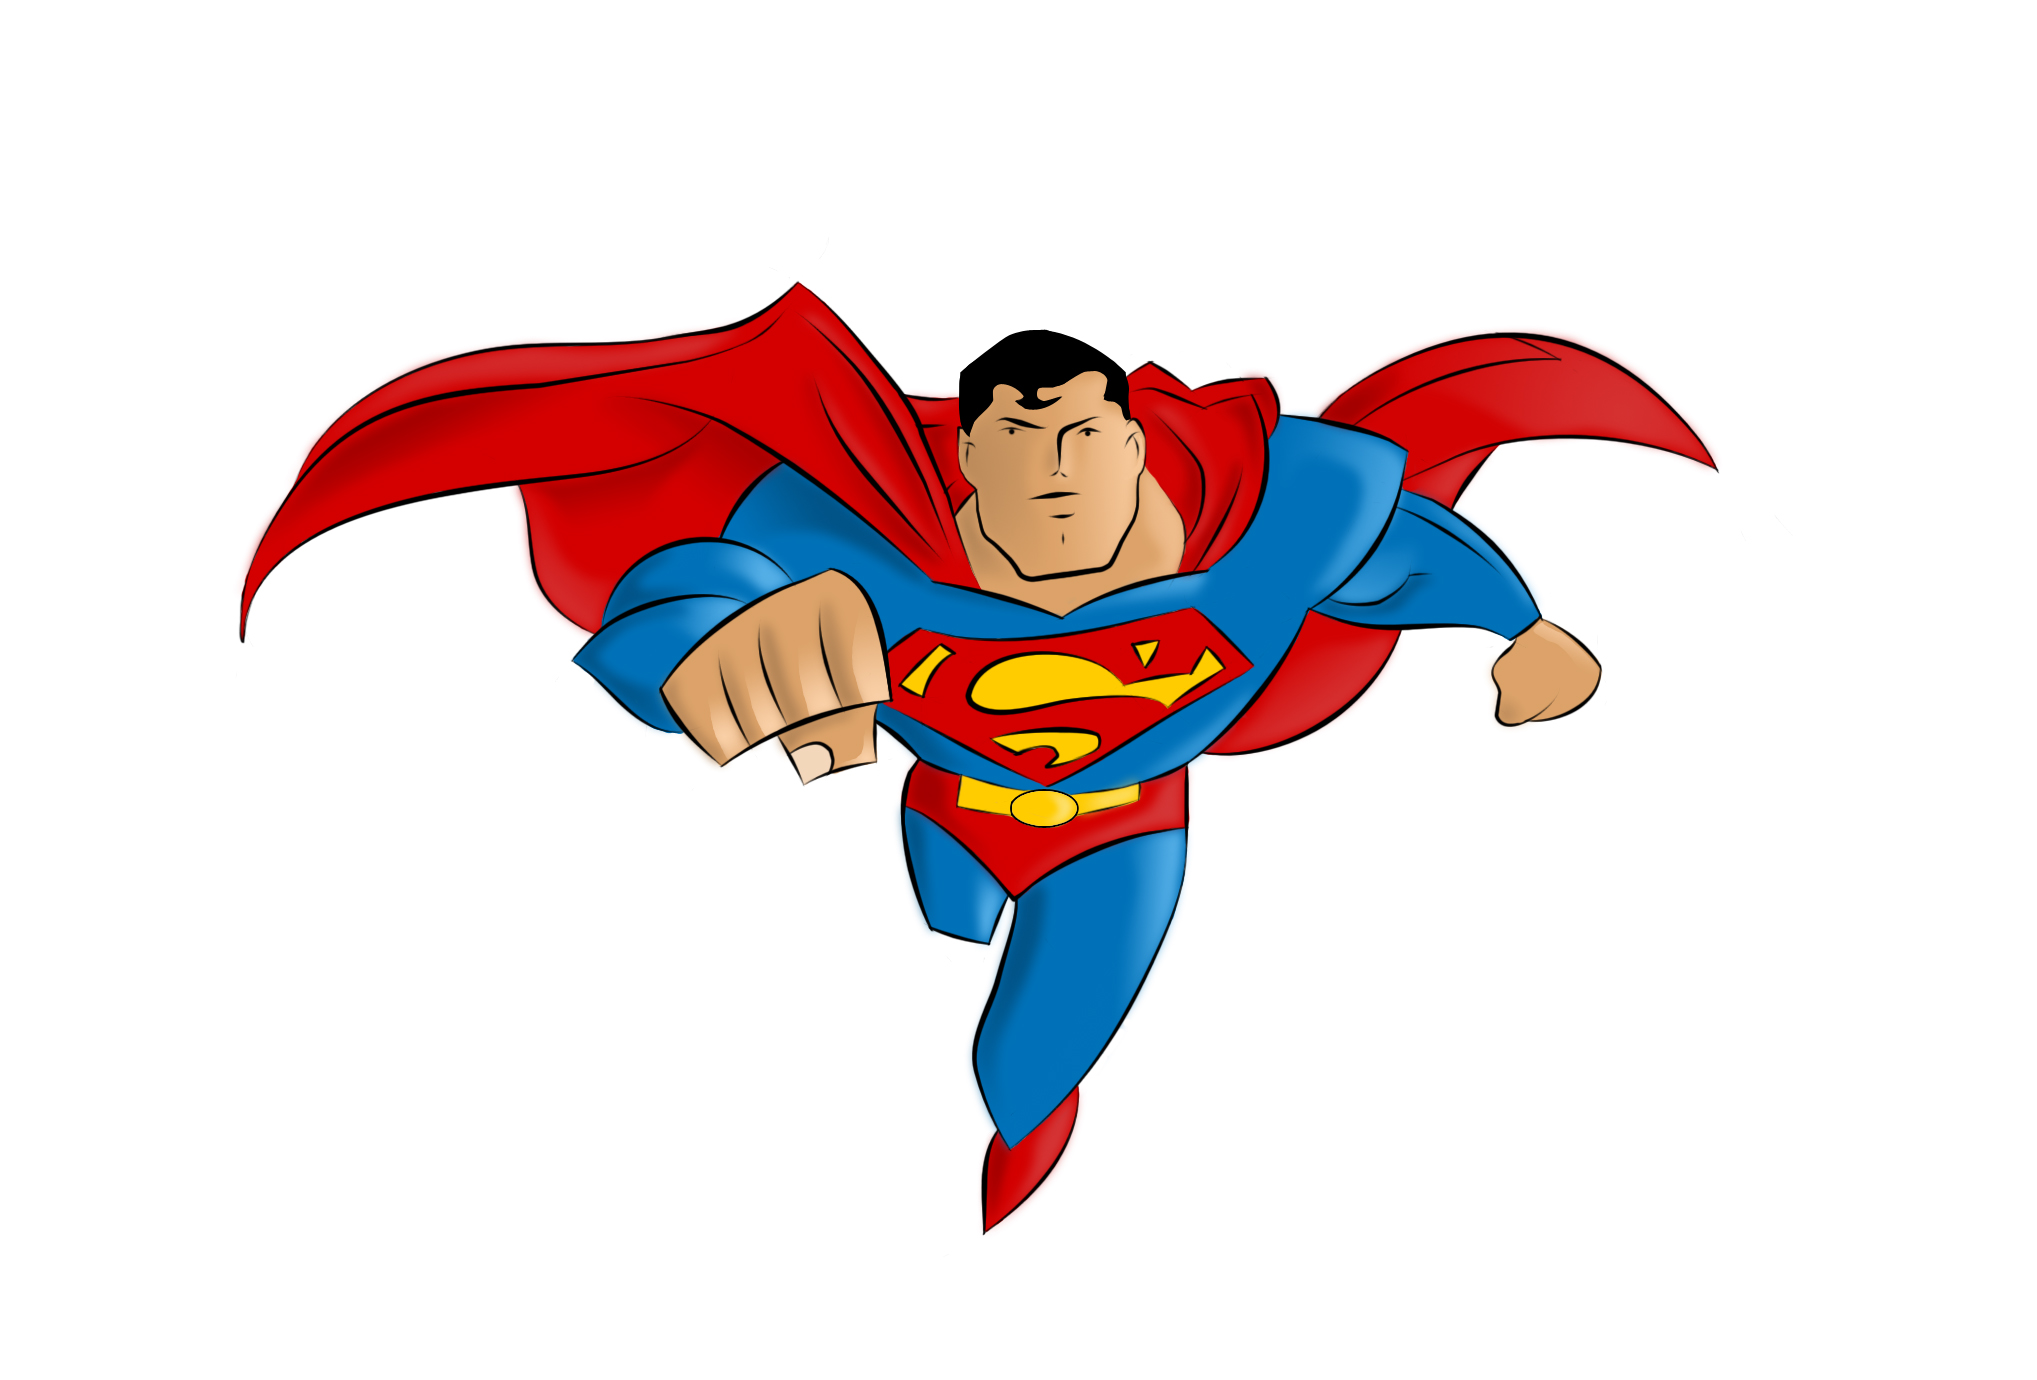 Superman logo clipart